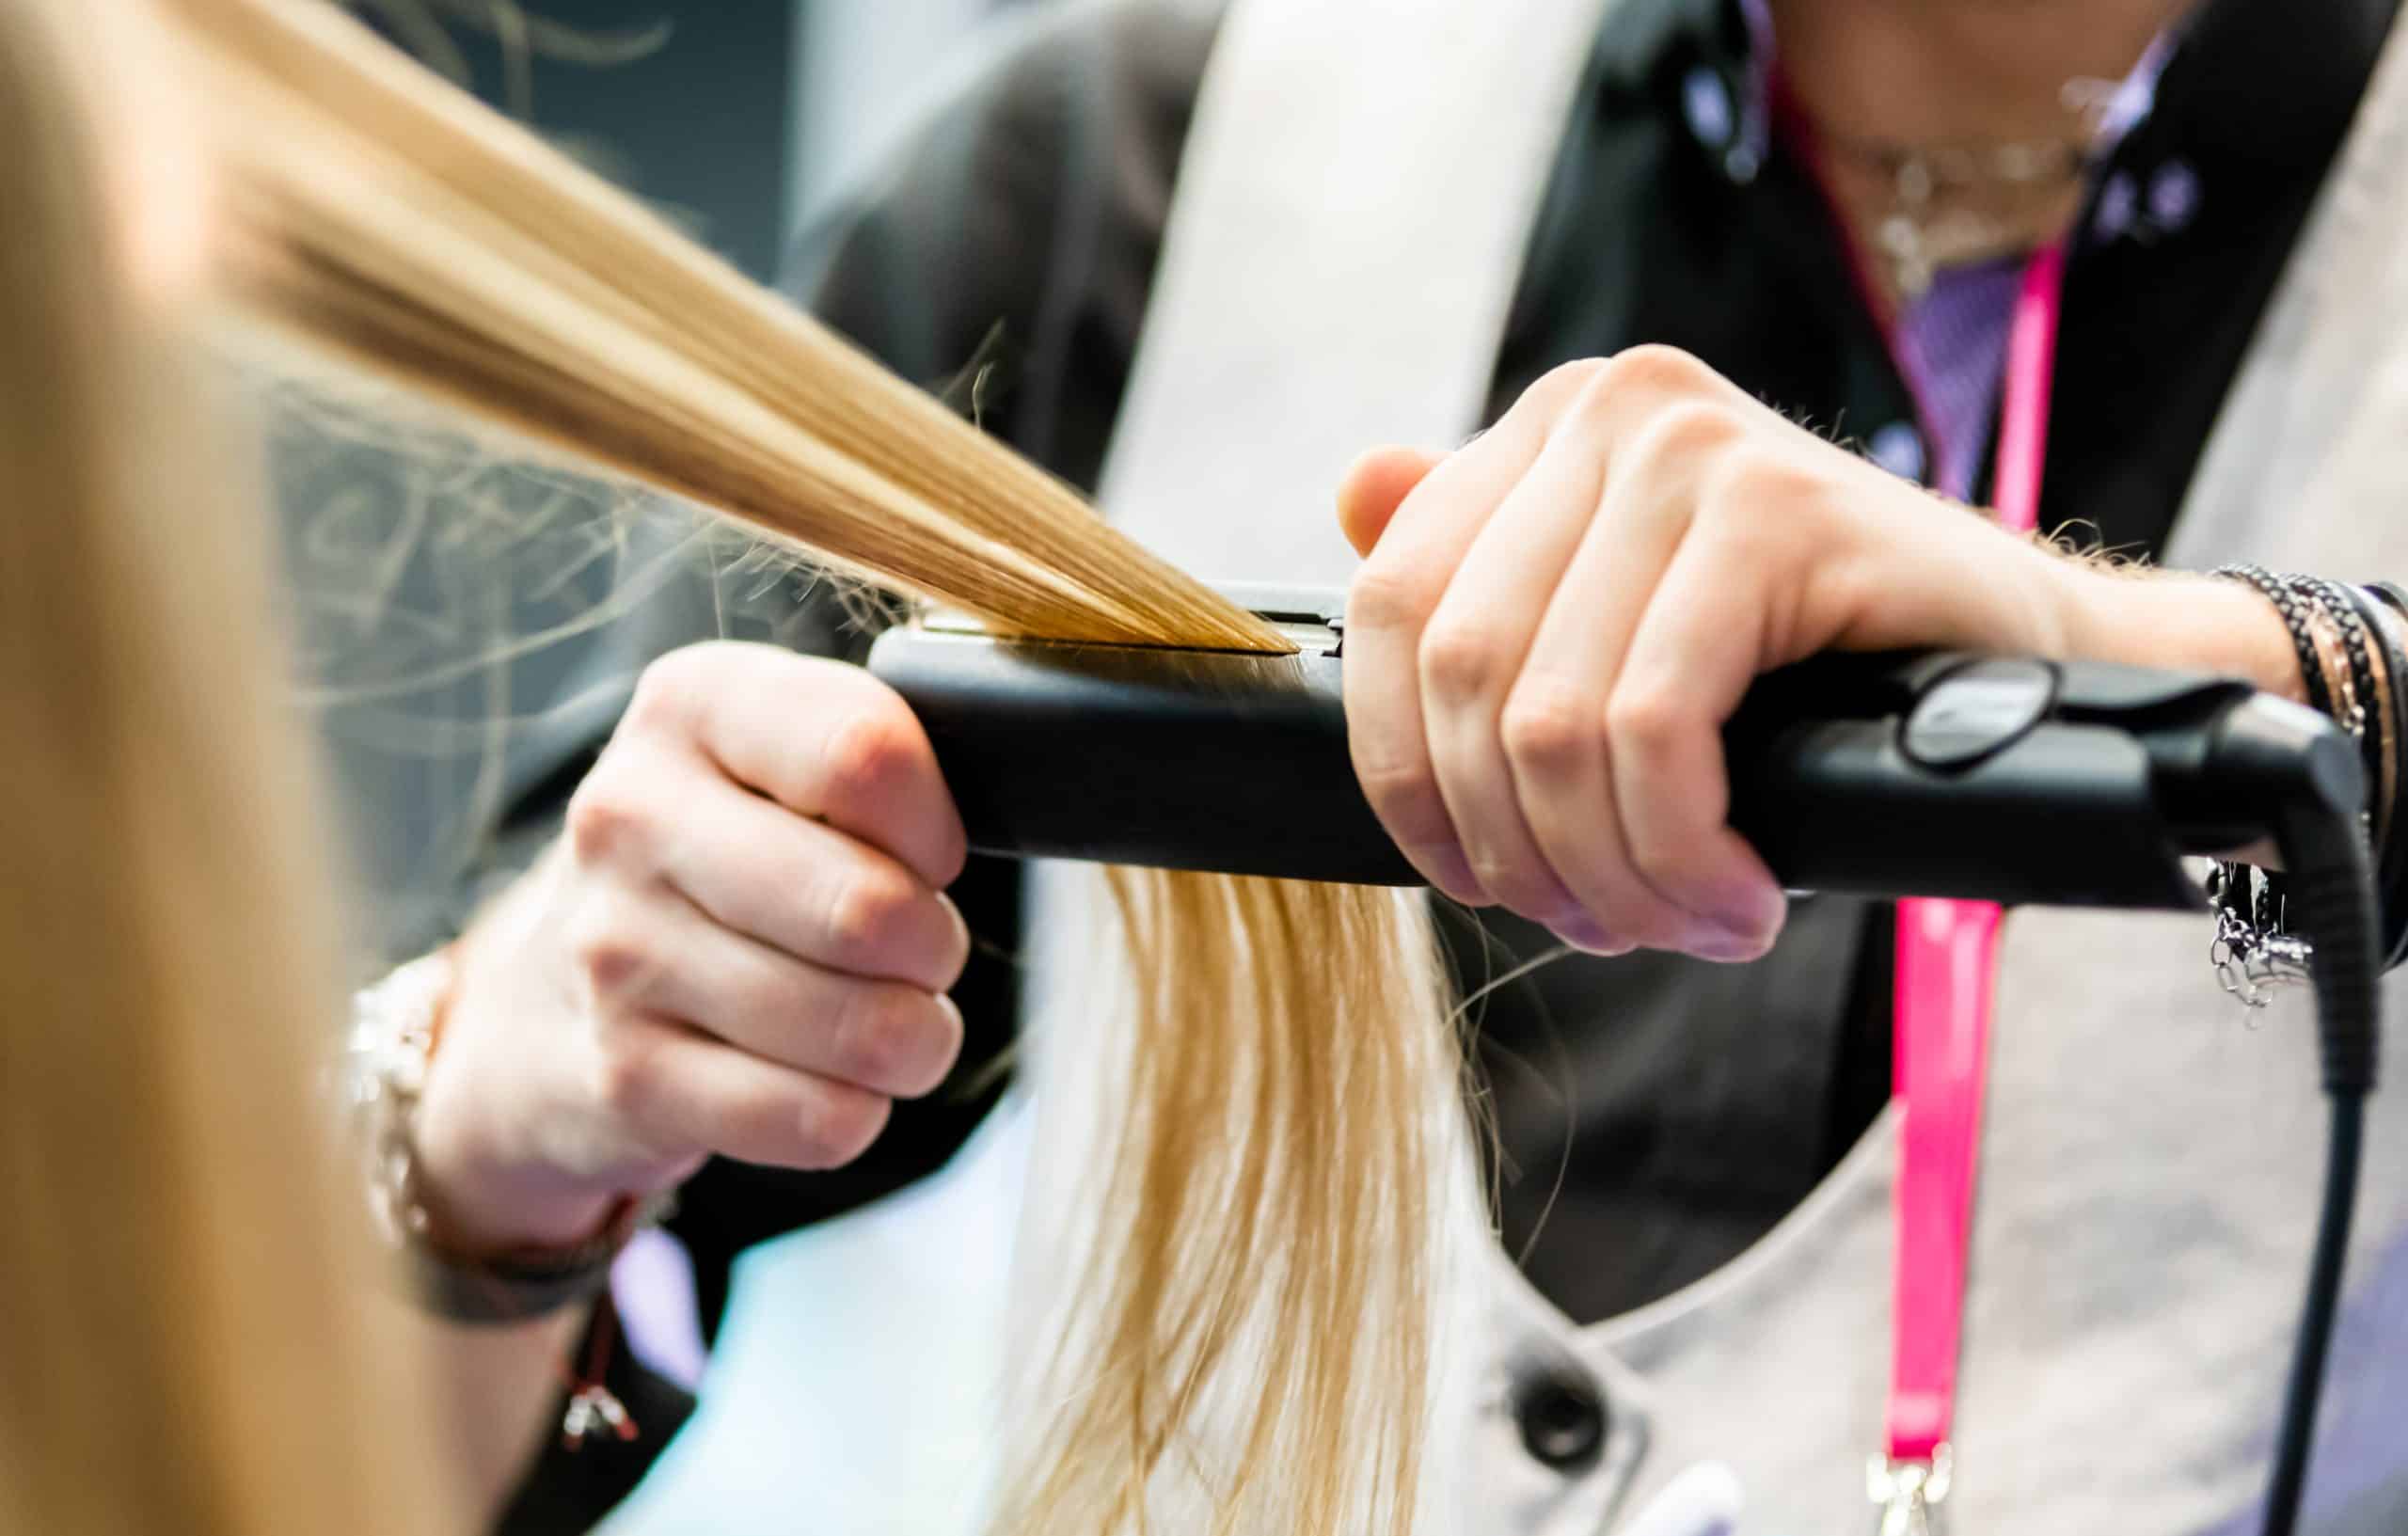 Professional hairdresser straightening long blond hair using straightener